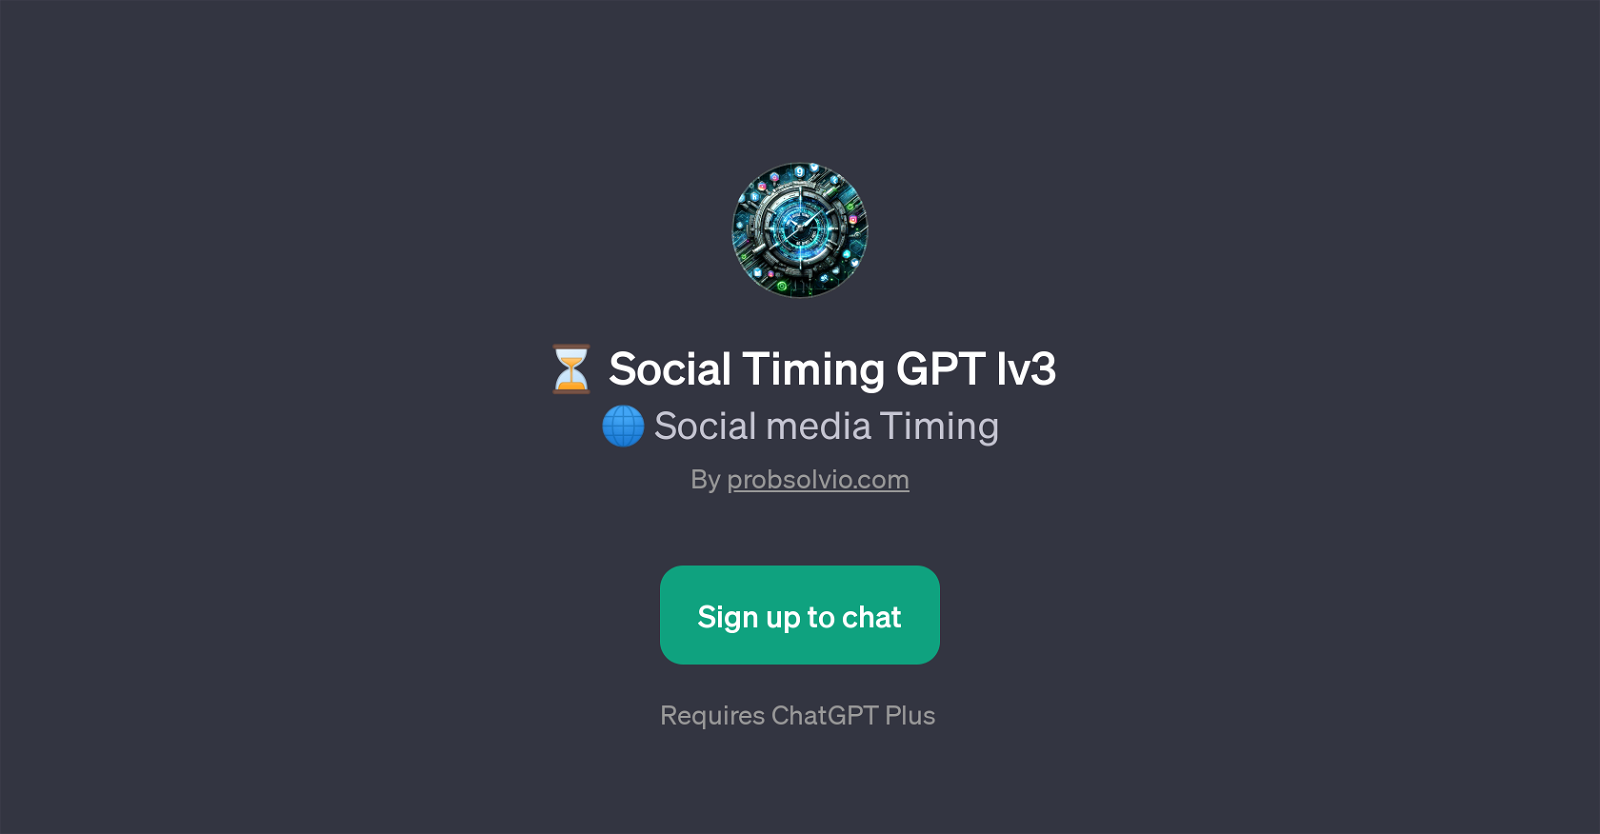 Social Timing GPT lv3 website